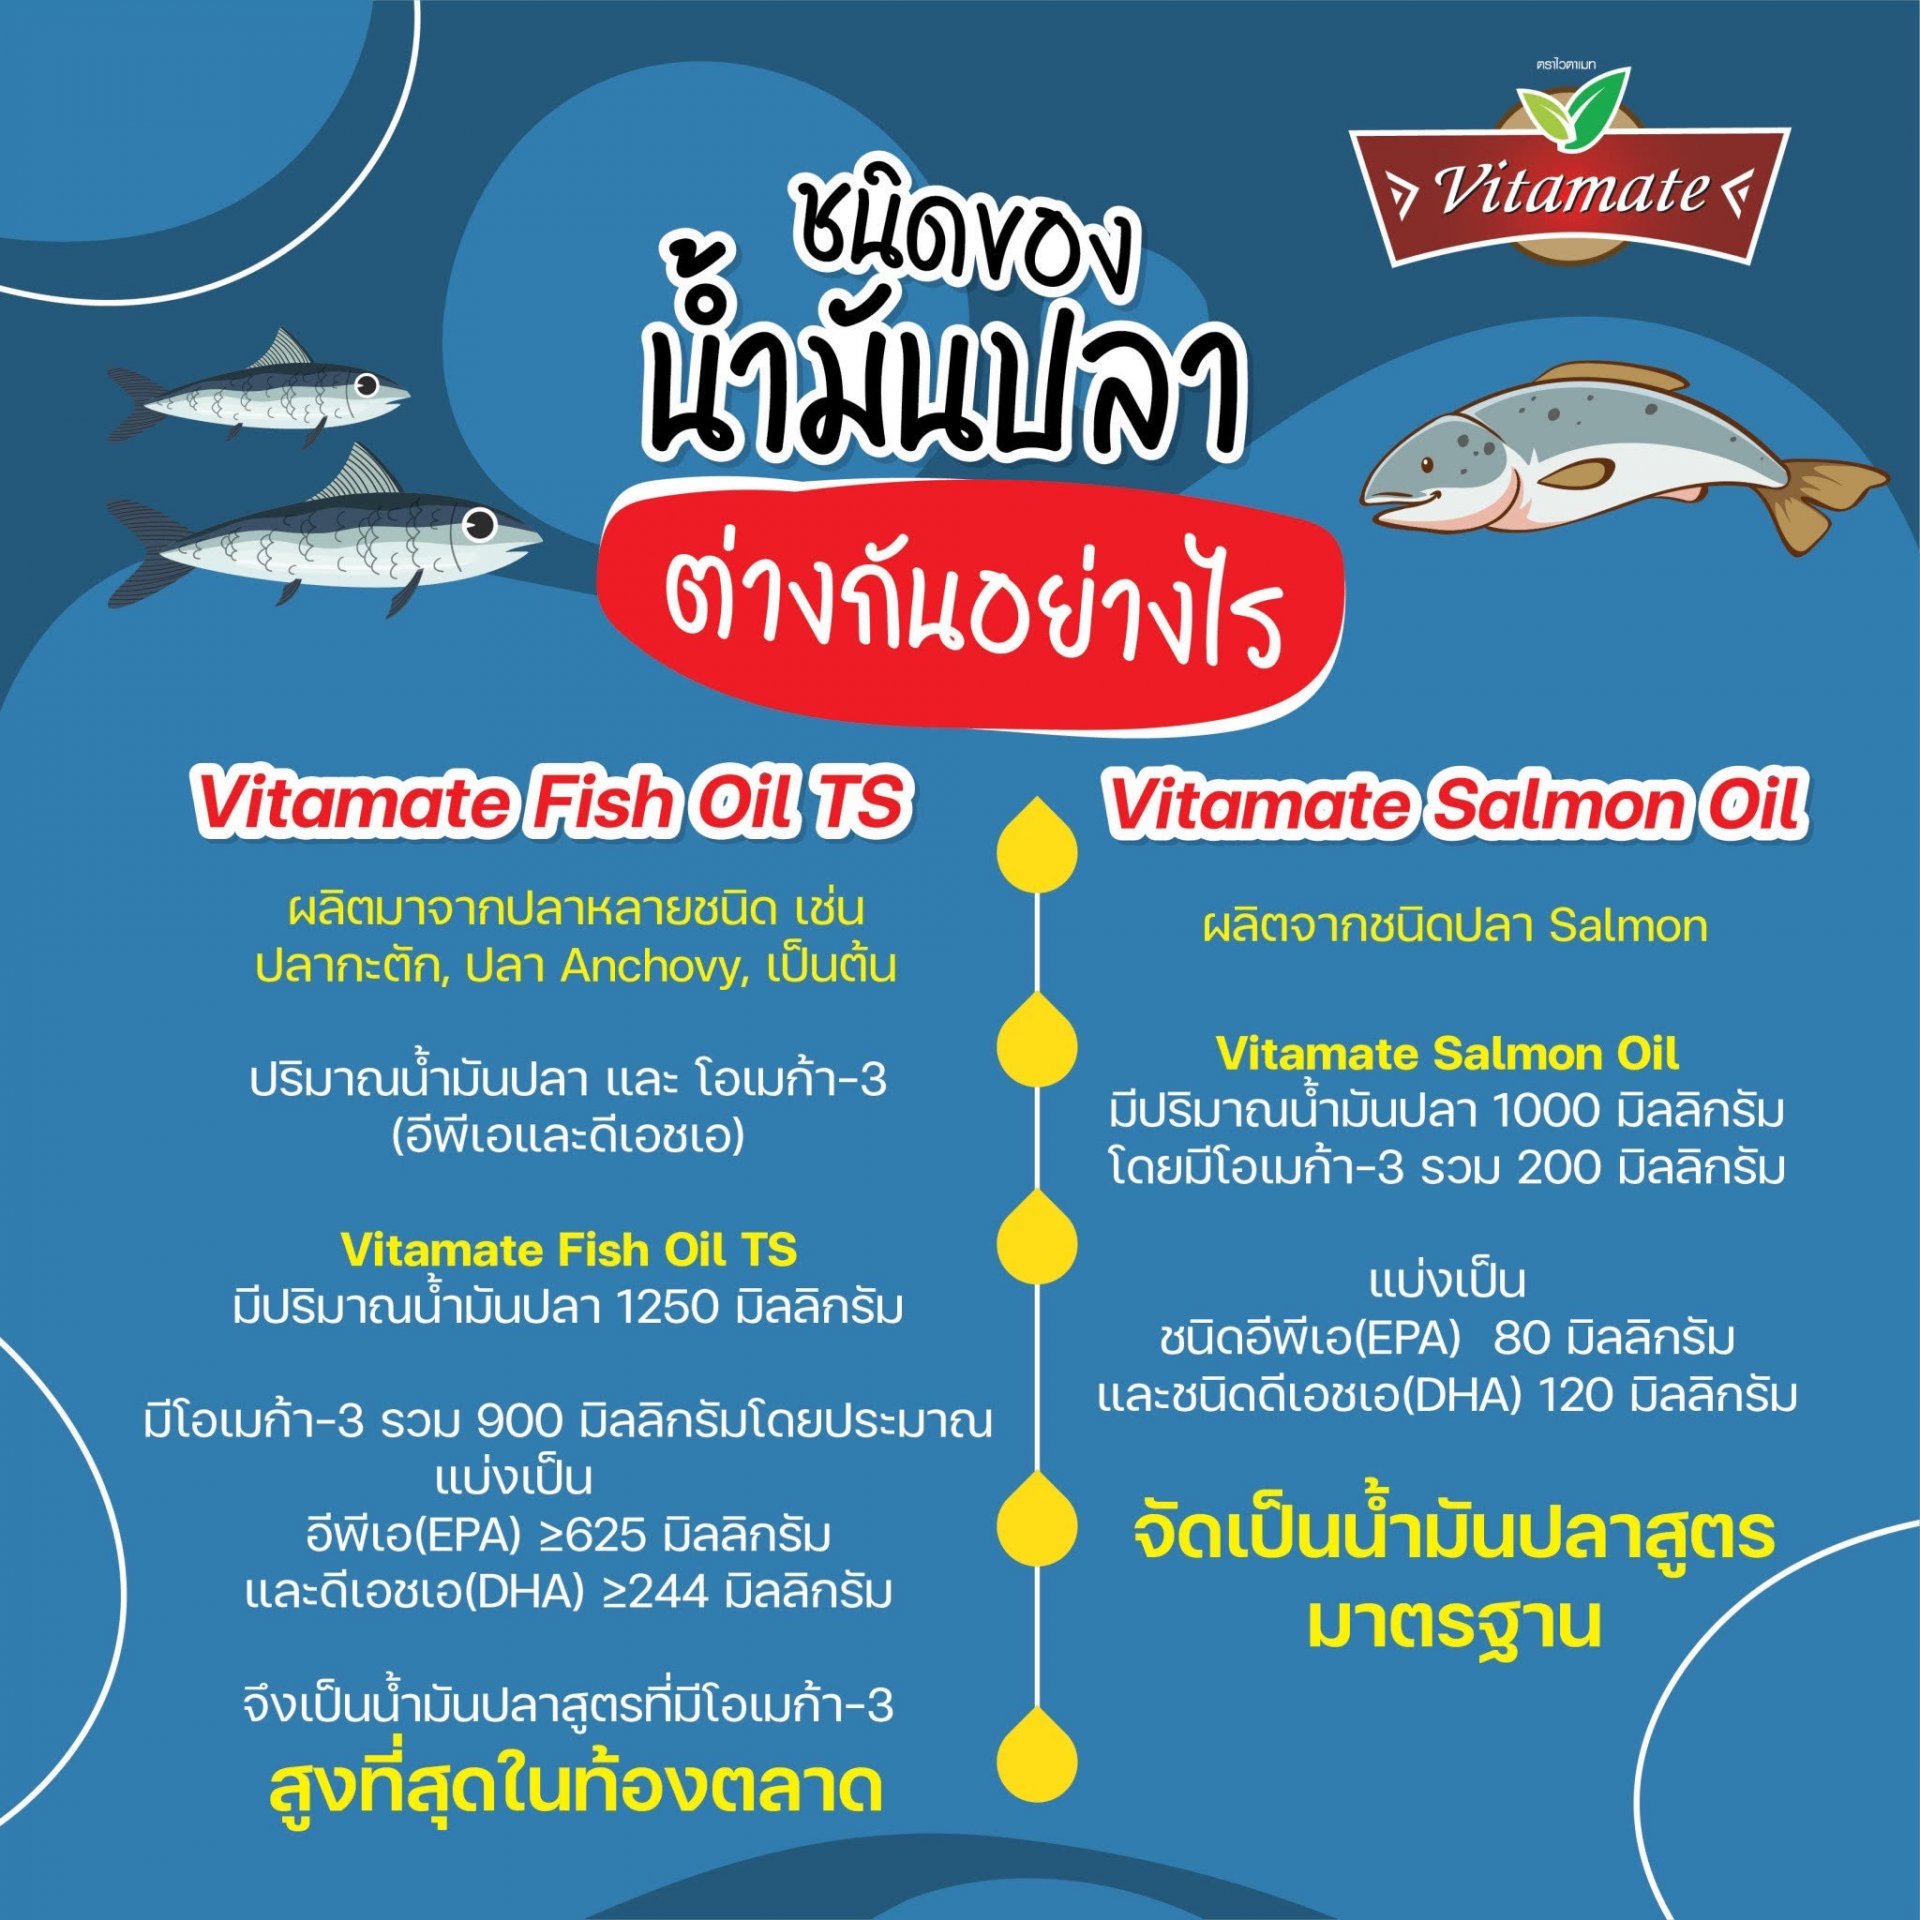 Fish oil TS กับ Salmon oil แตกต่างหรือเหมือนกันยังไง